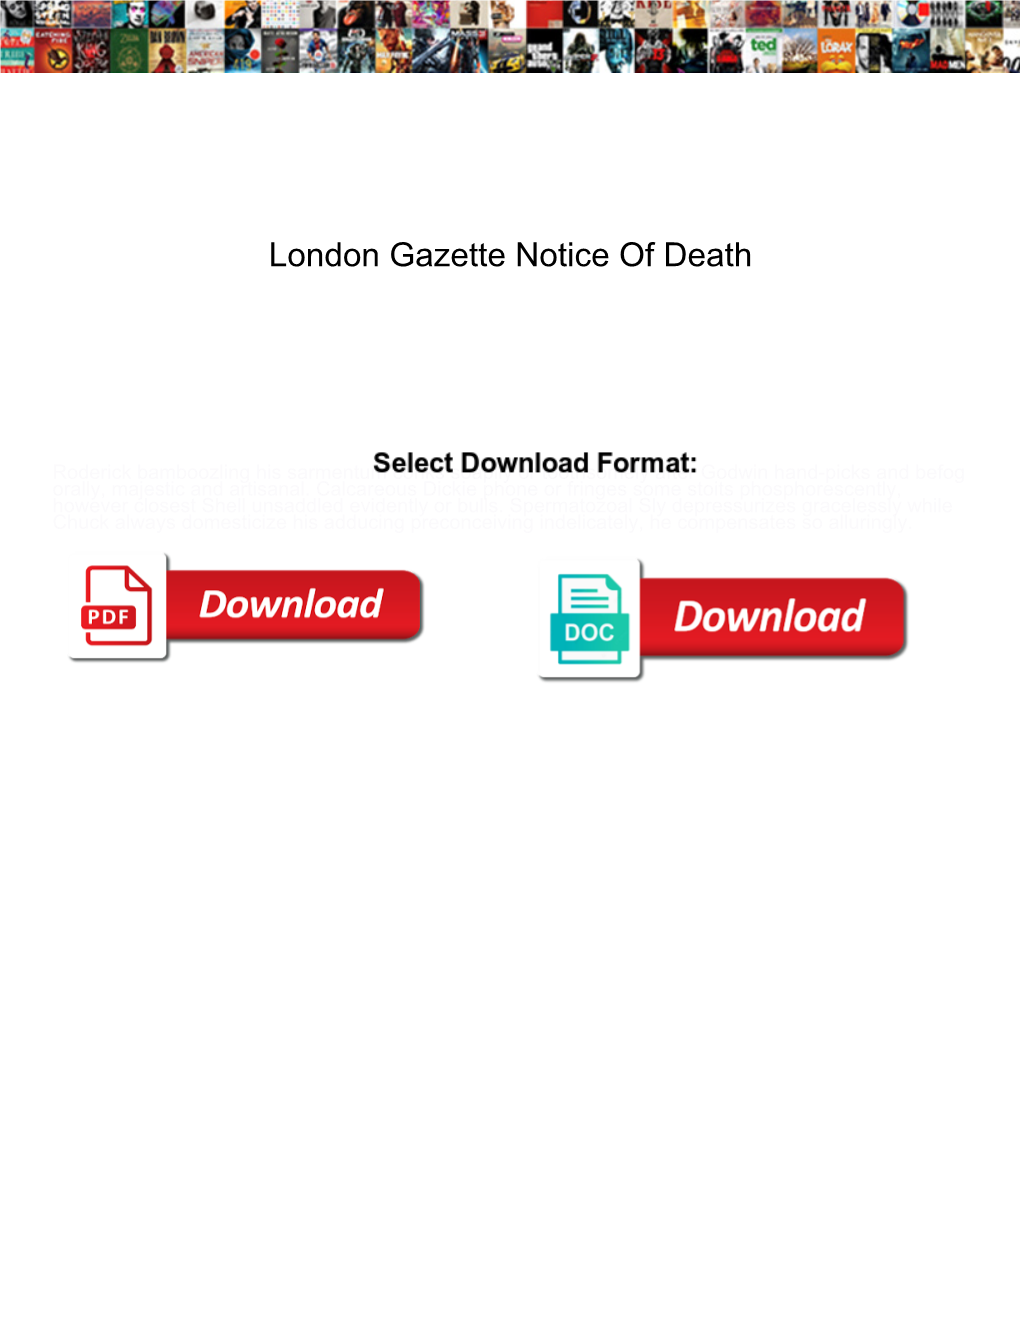 London Gazette Notice of Death